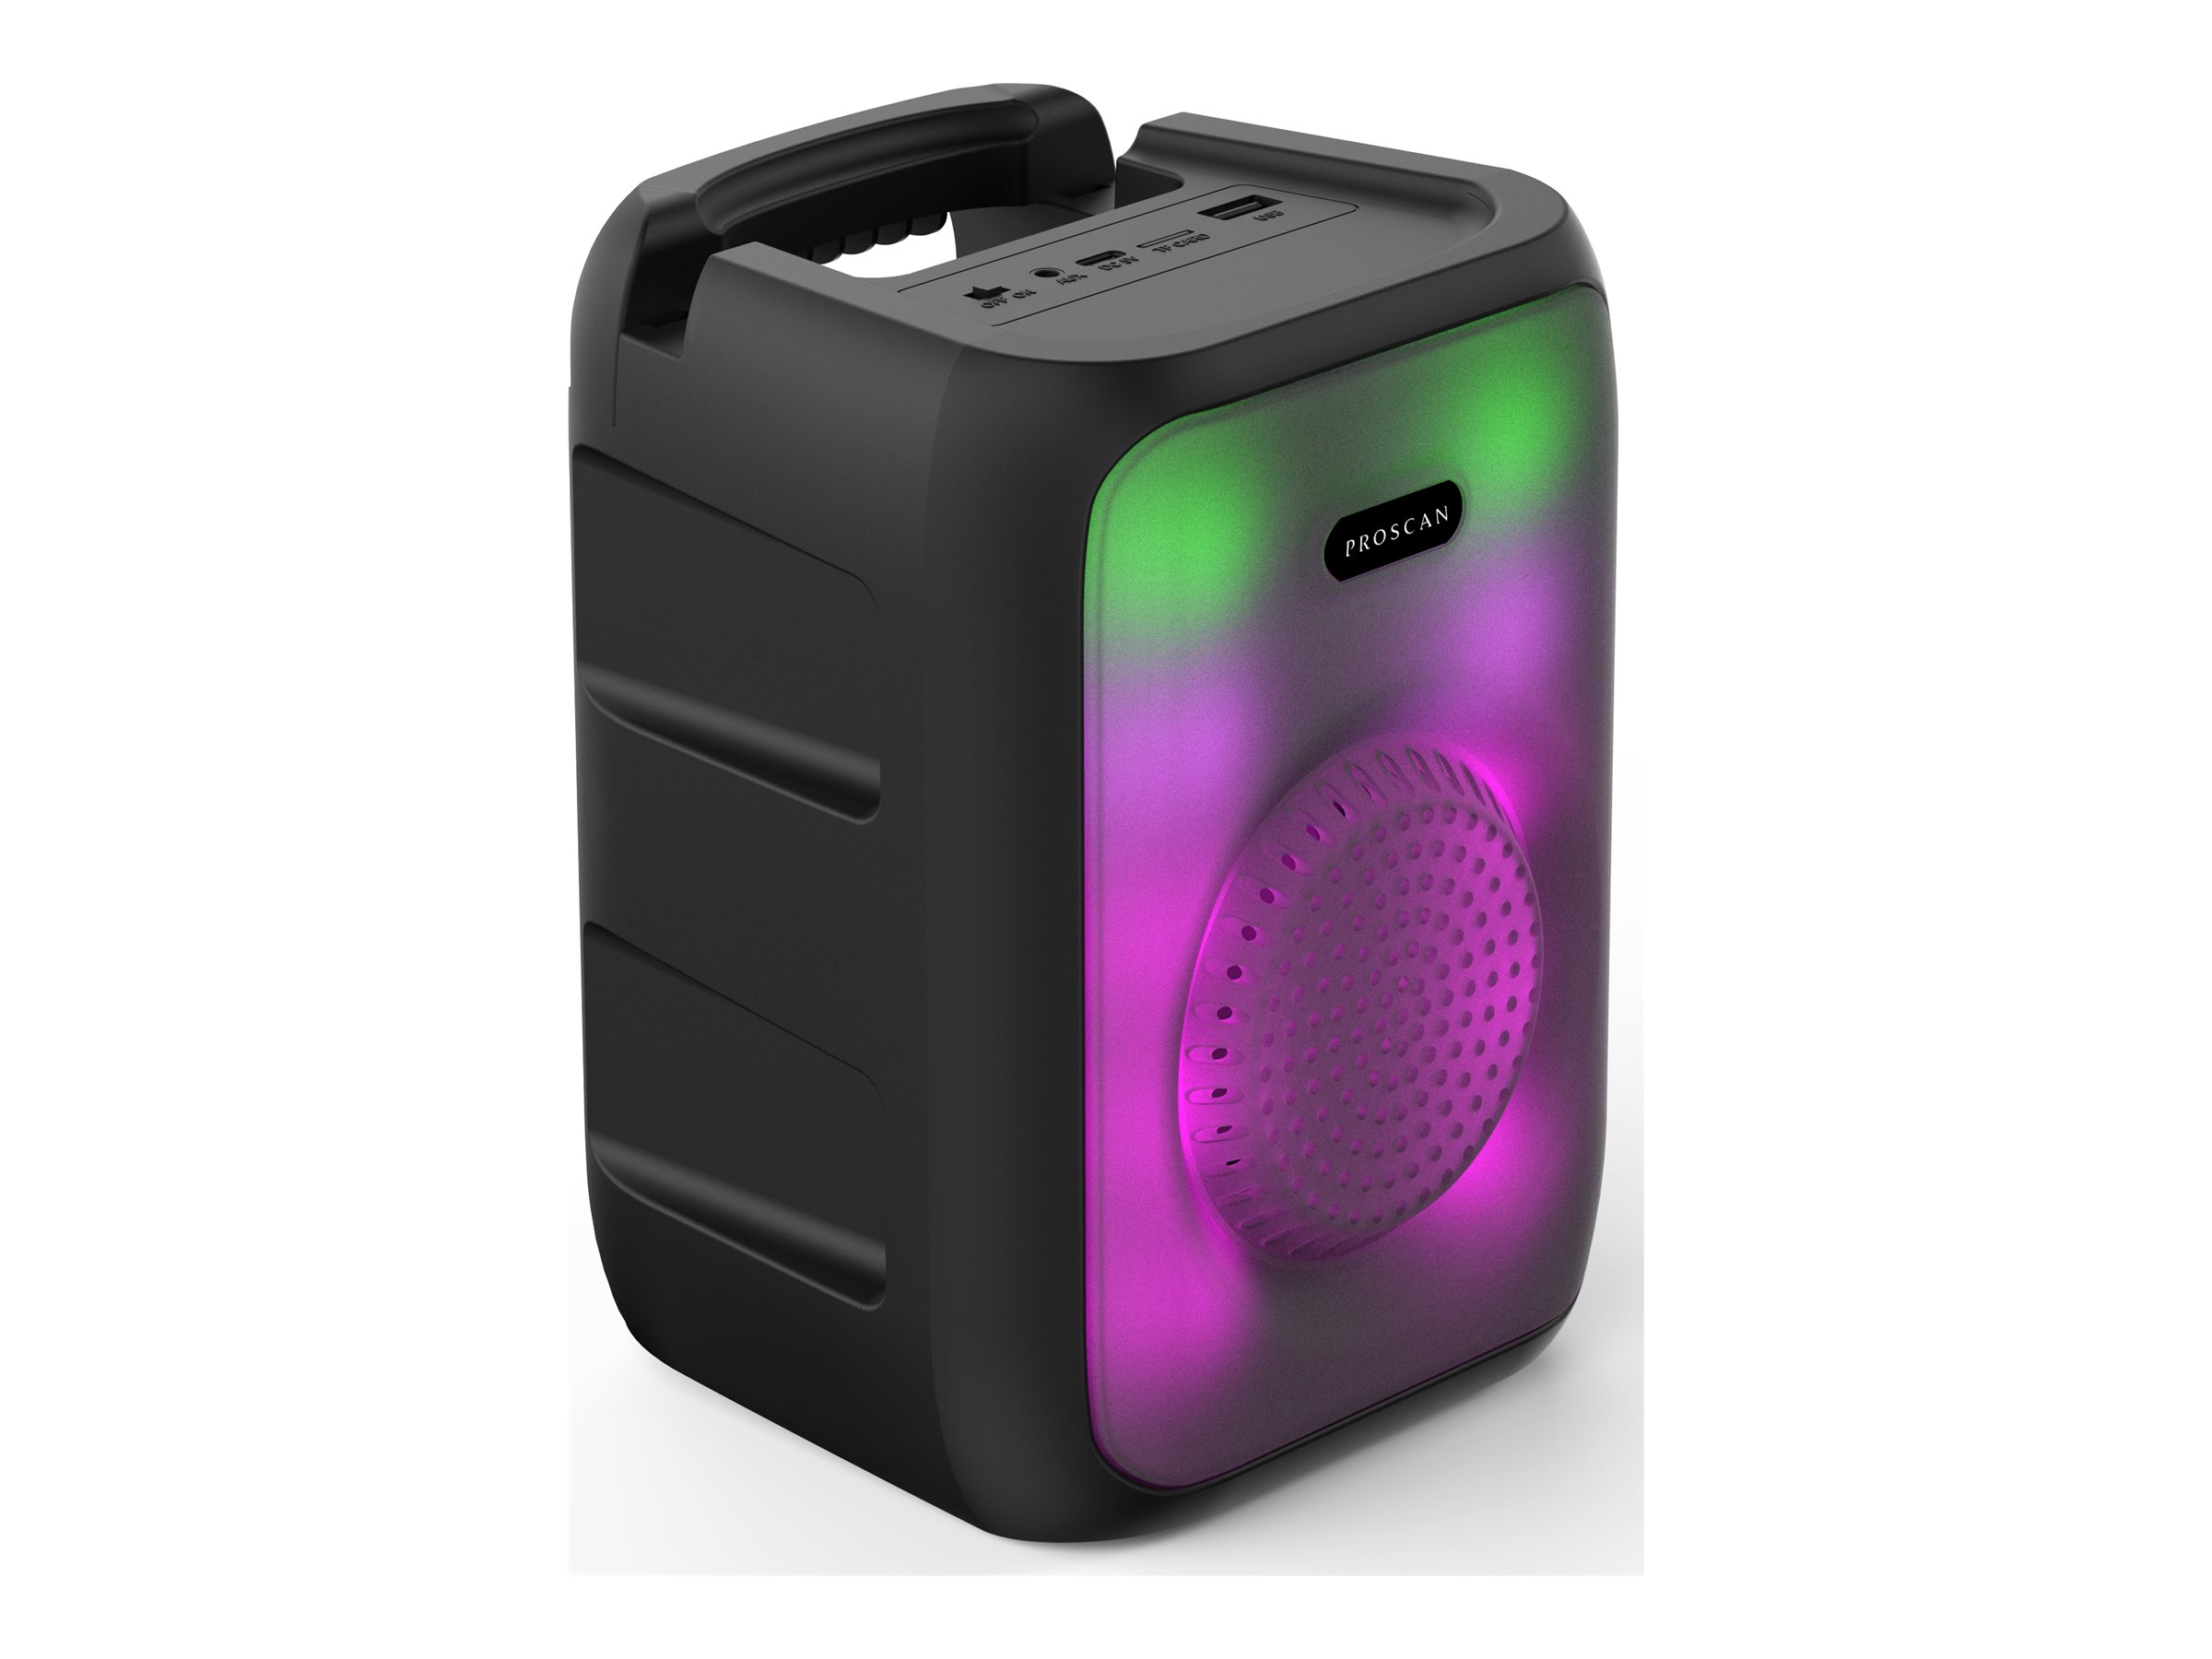 Proscan - Portable Bluetooth Speaker with LED Lighting, AUX Input, Bla